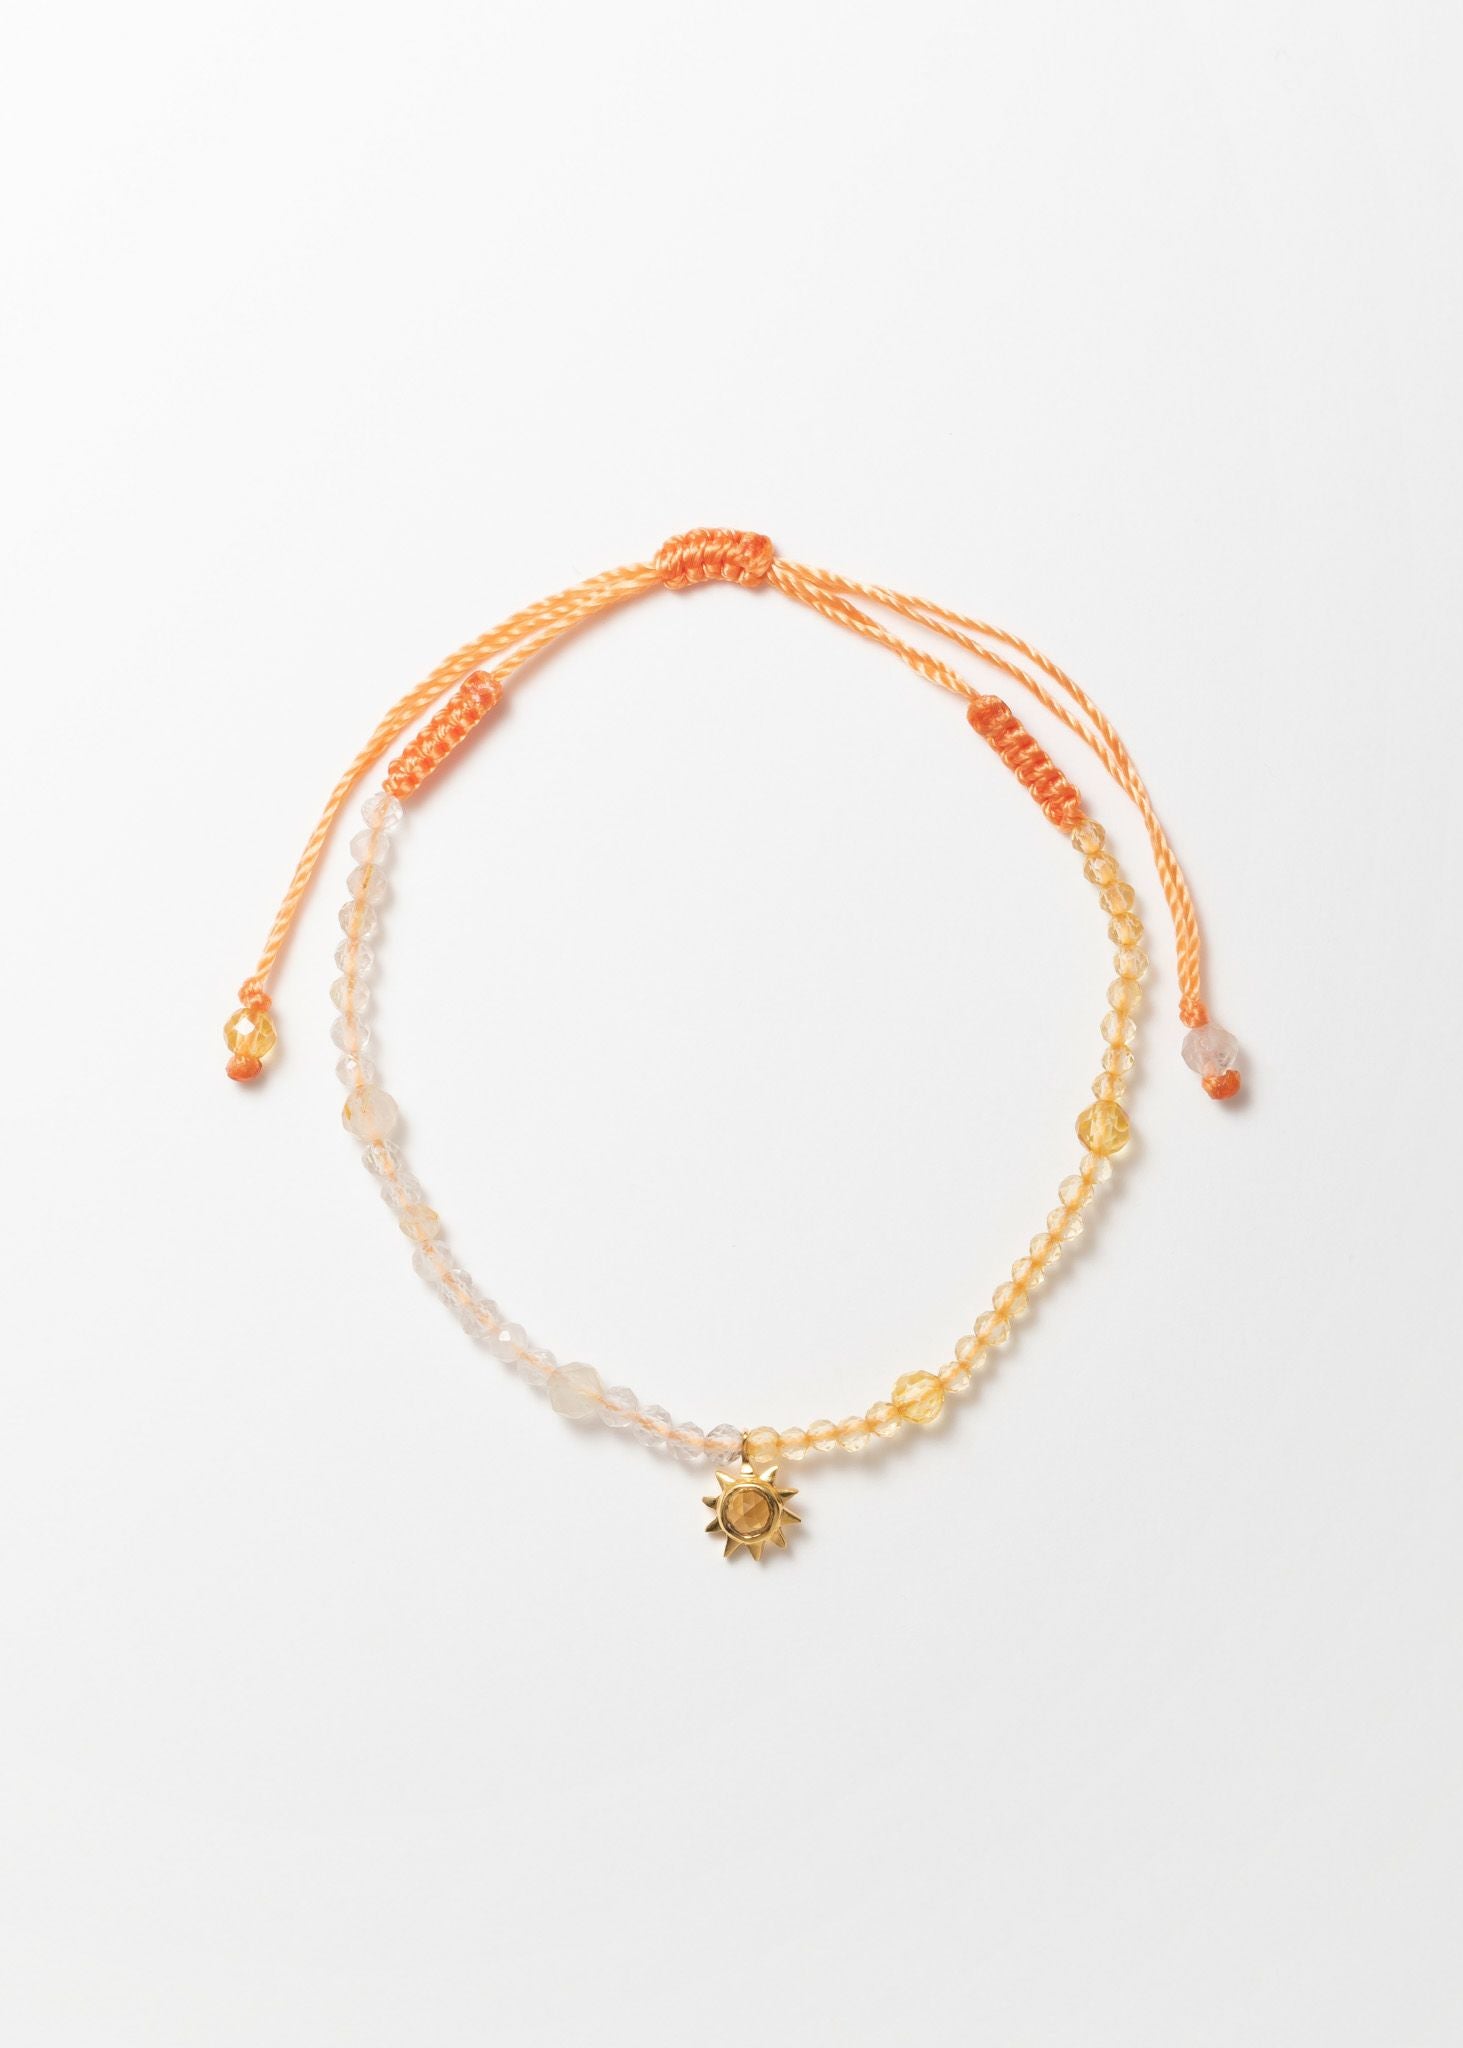 Leo -獅子座-Beads Bracelet With Charm